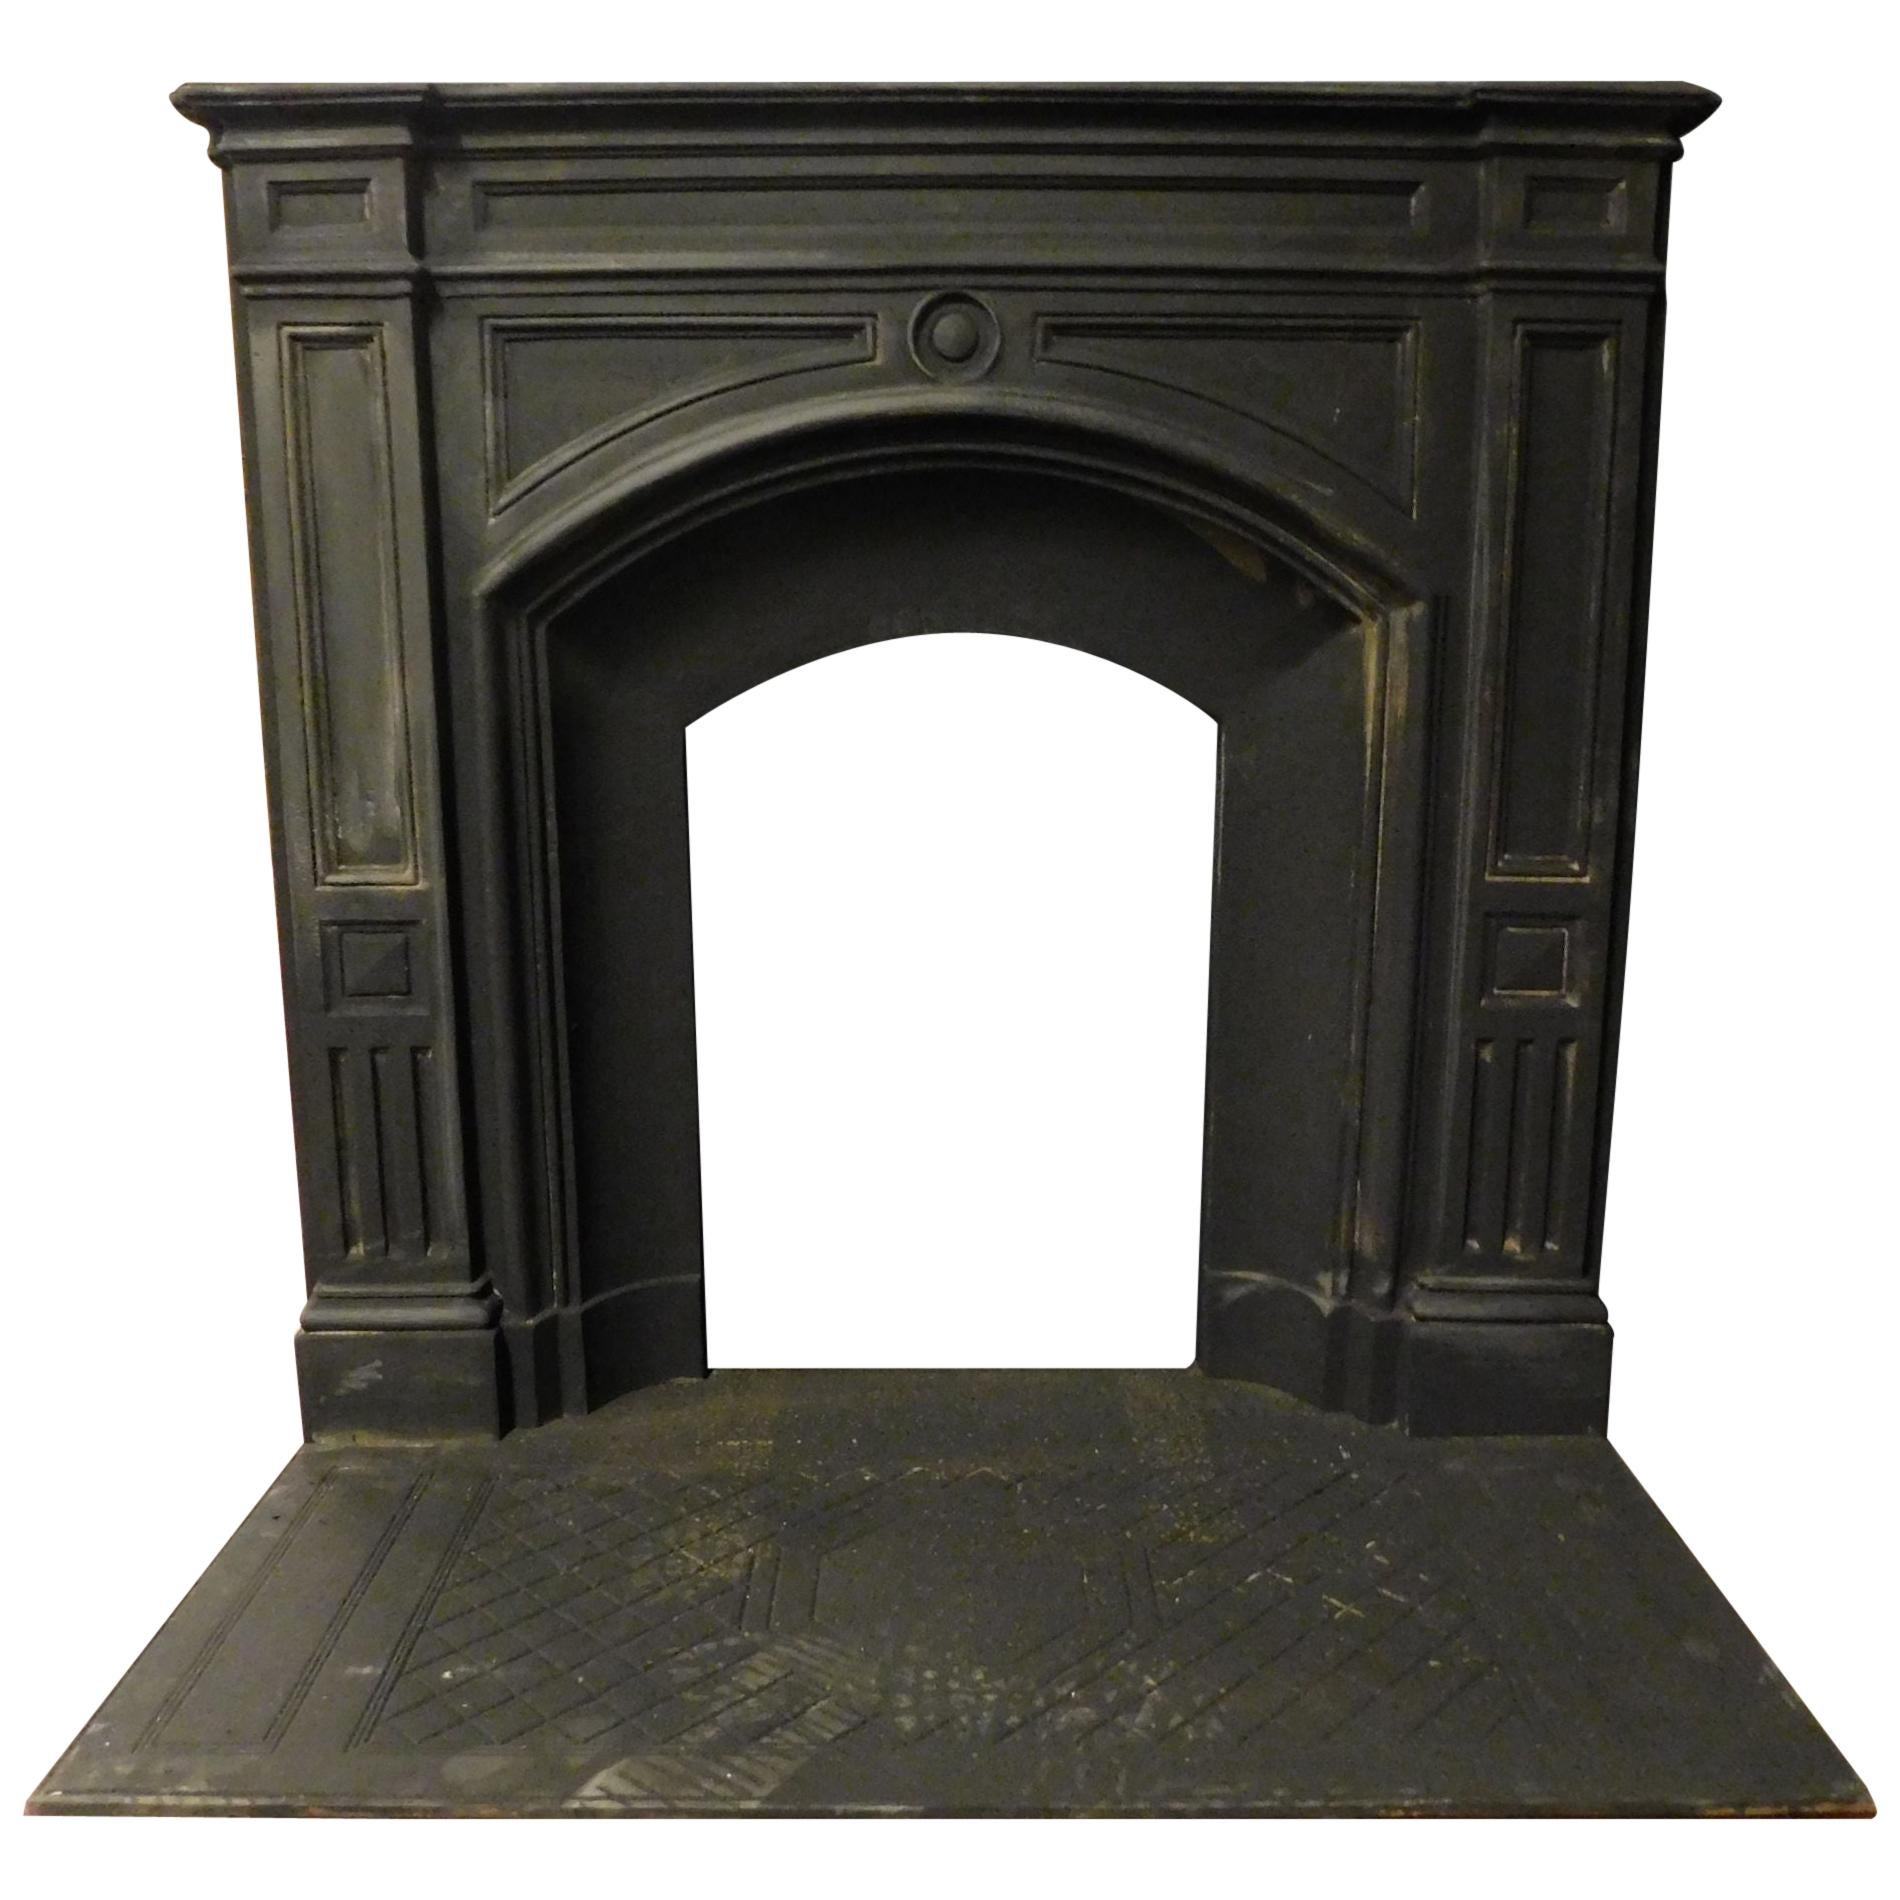 Antique Cast Iron Fireplace Mantle, Black Iron & Wood, Late 19th Century England